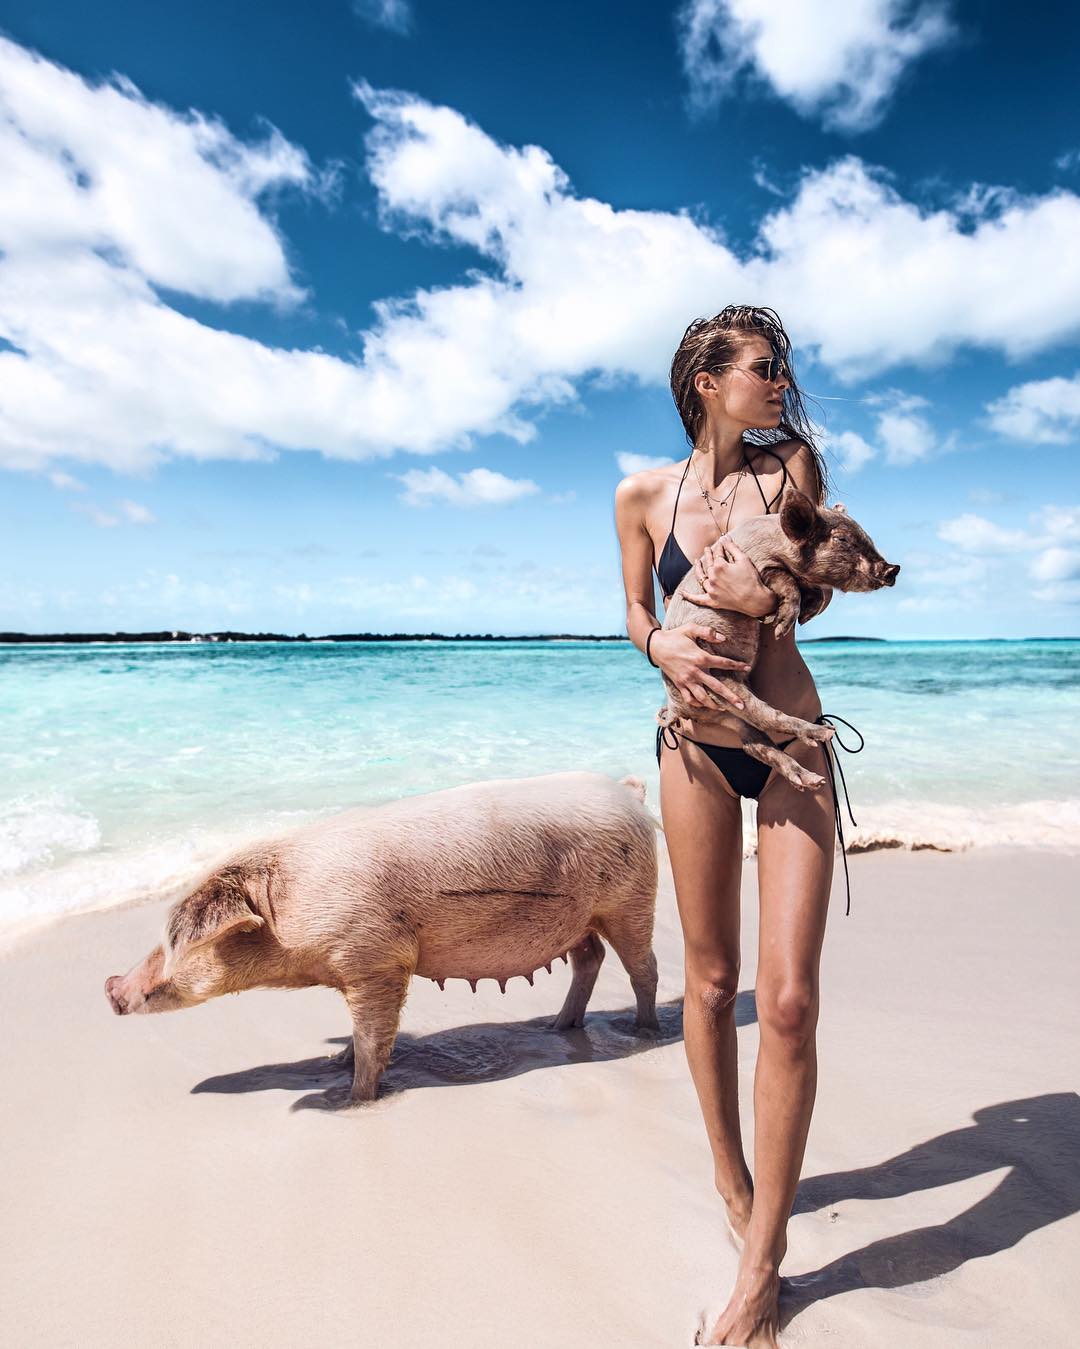 Pig Island, Bahamas. Credits to @debiflue on Instagram